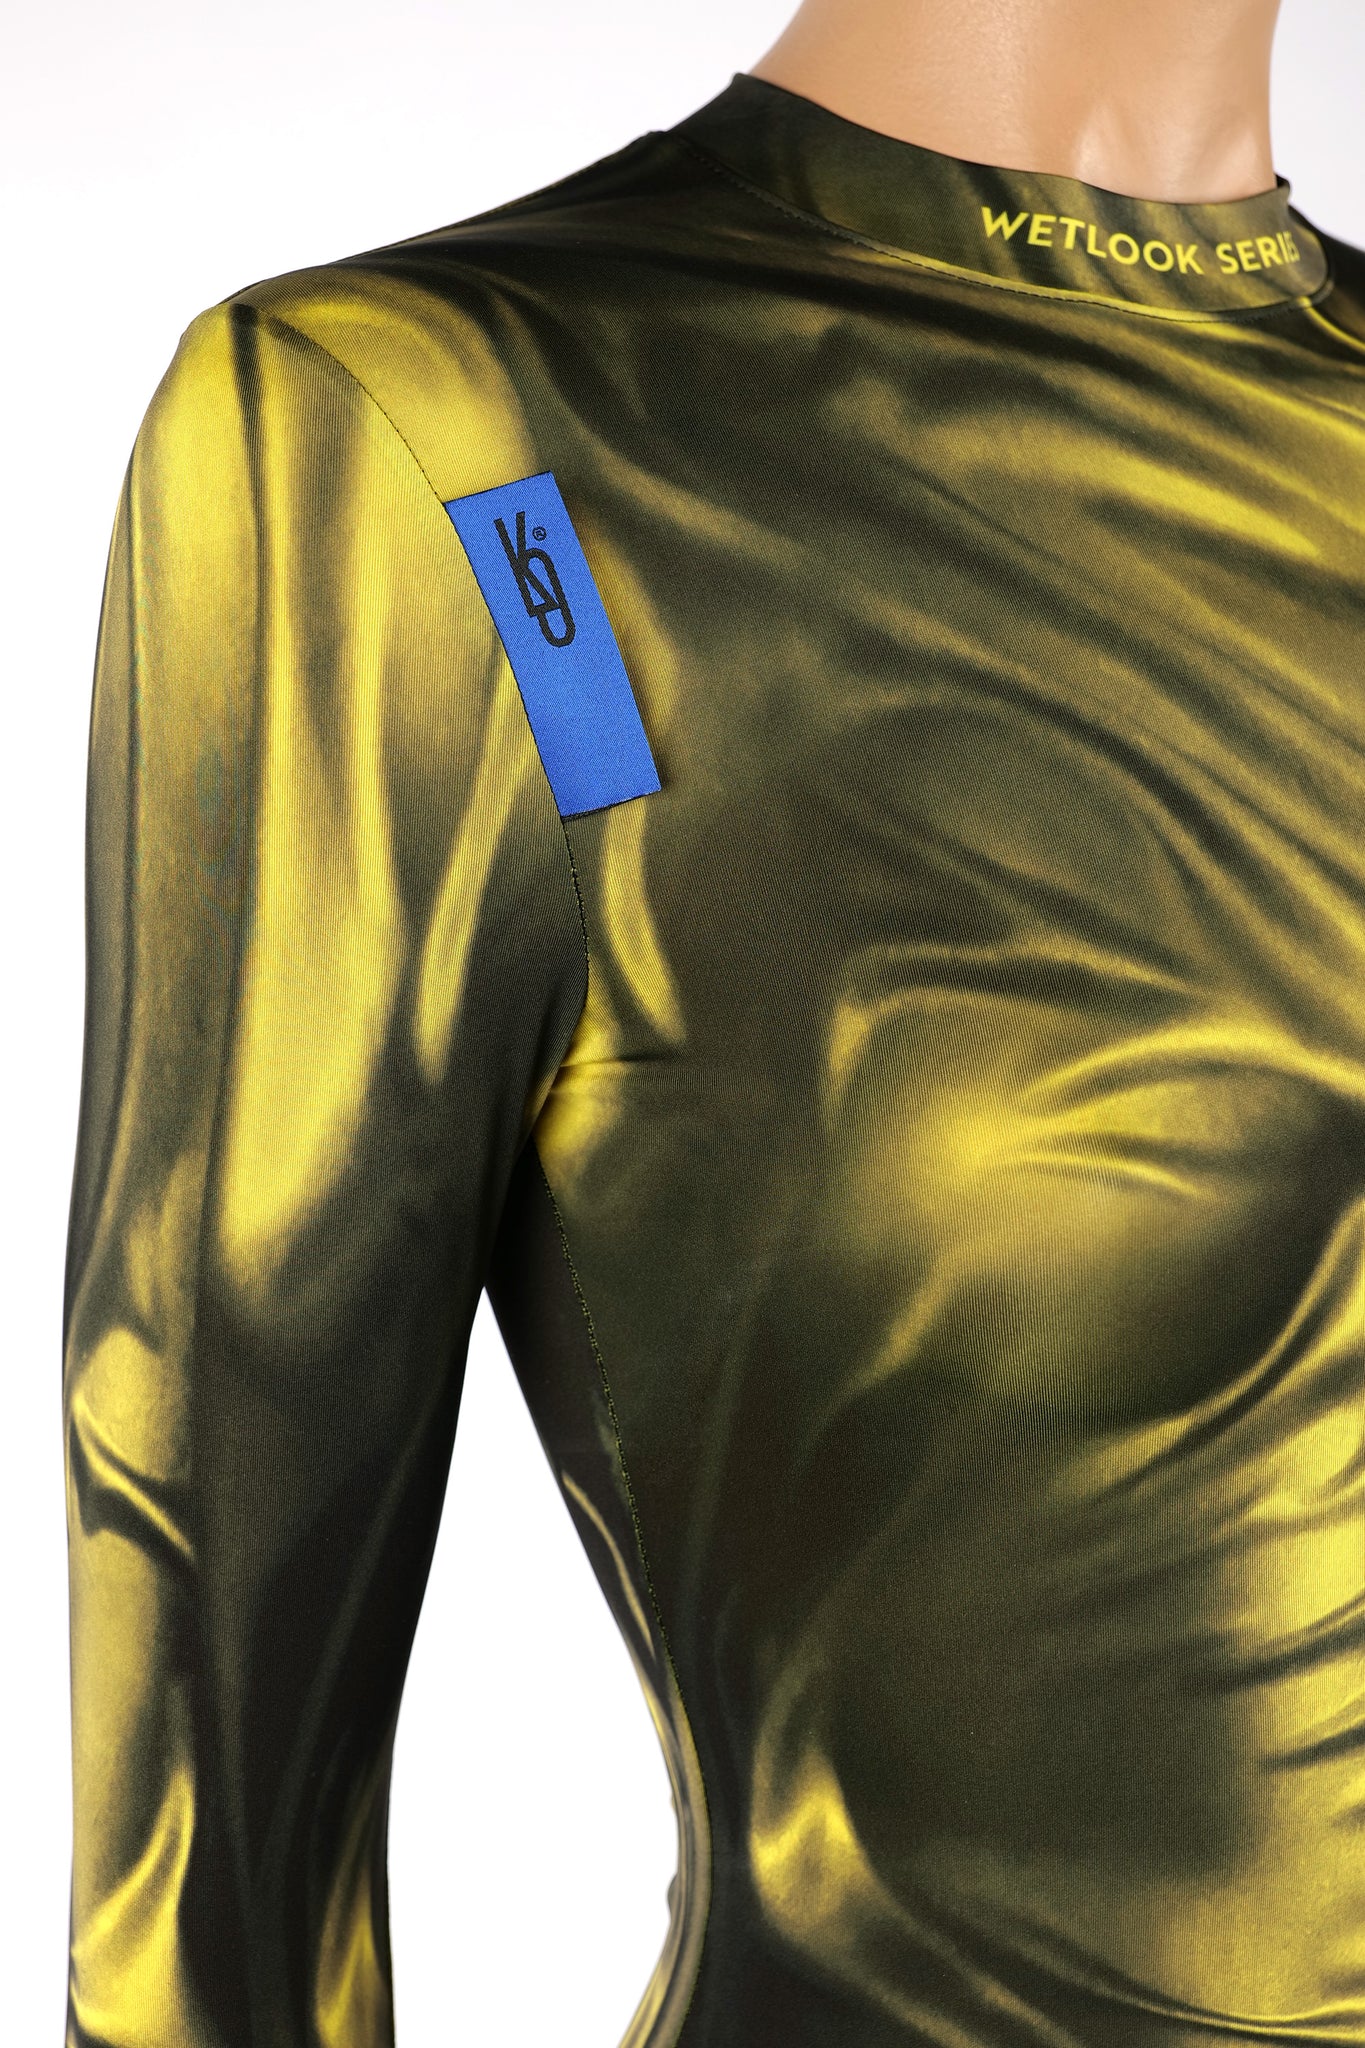 Yellow Wetlook Bodysuit